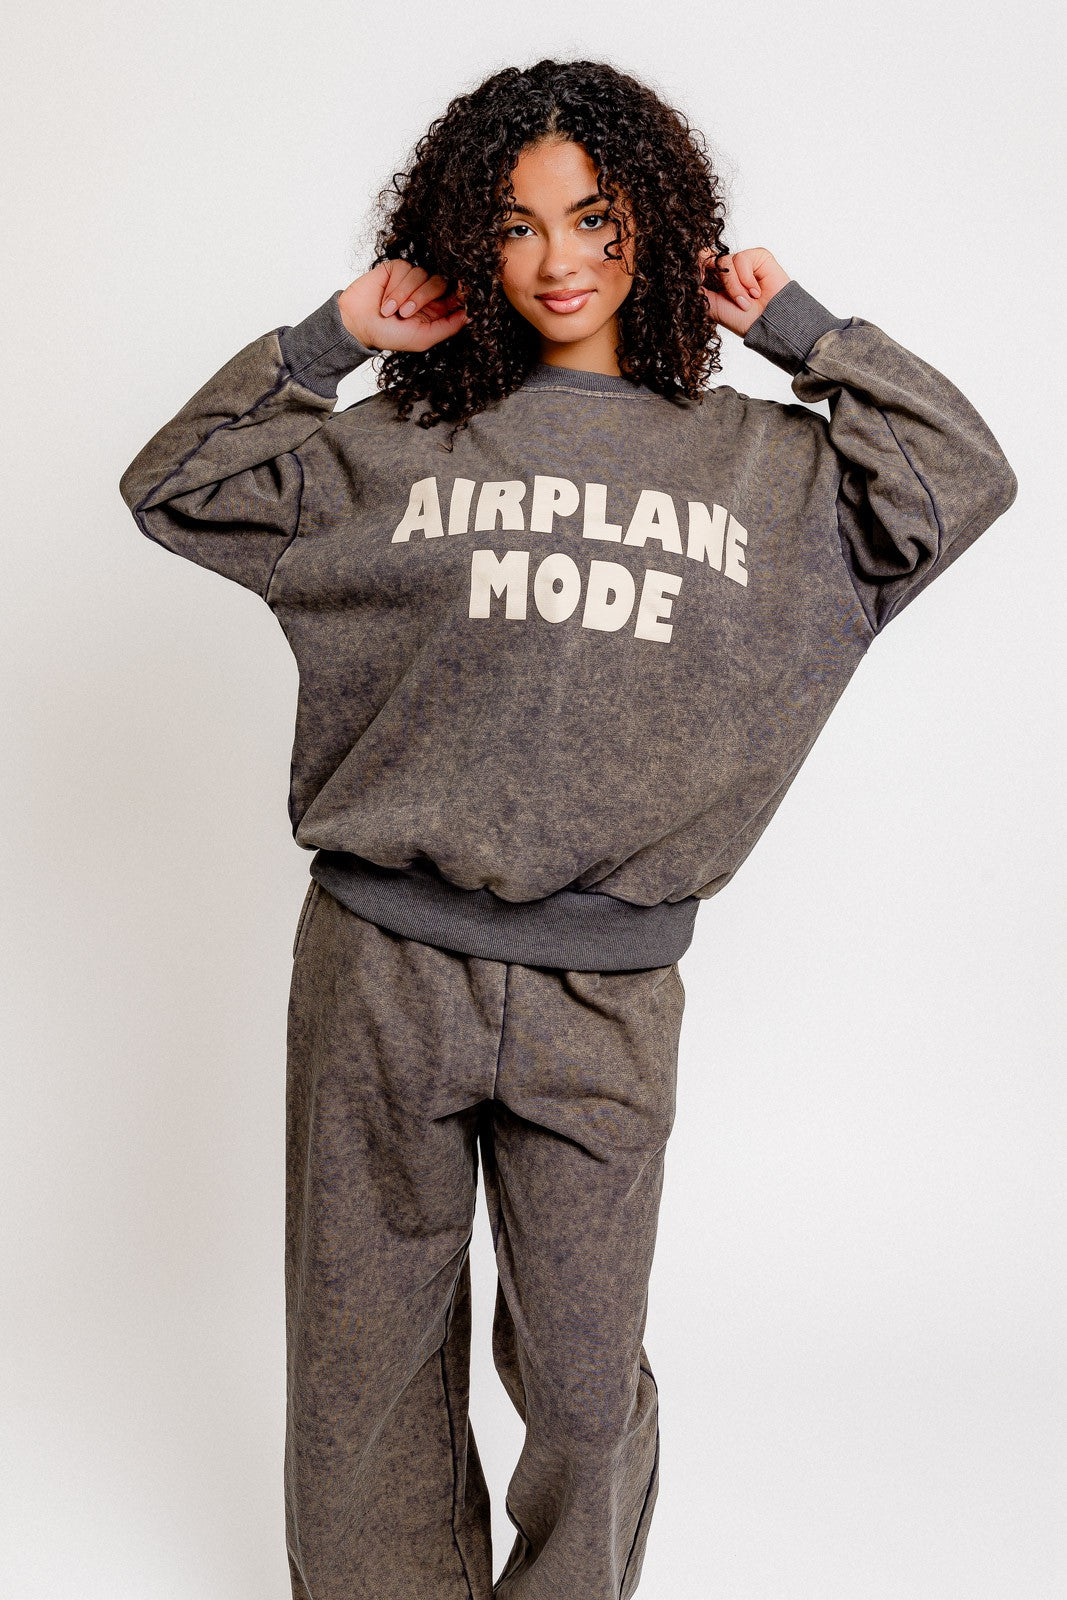 Airplane Mode Sweatsuit